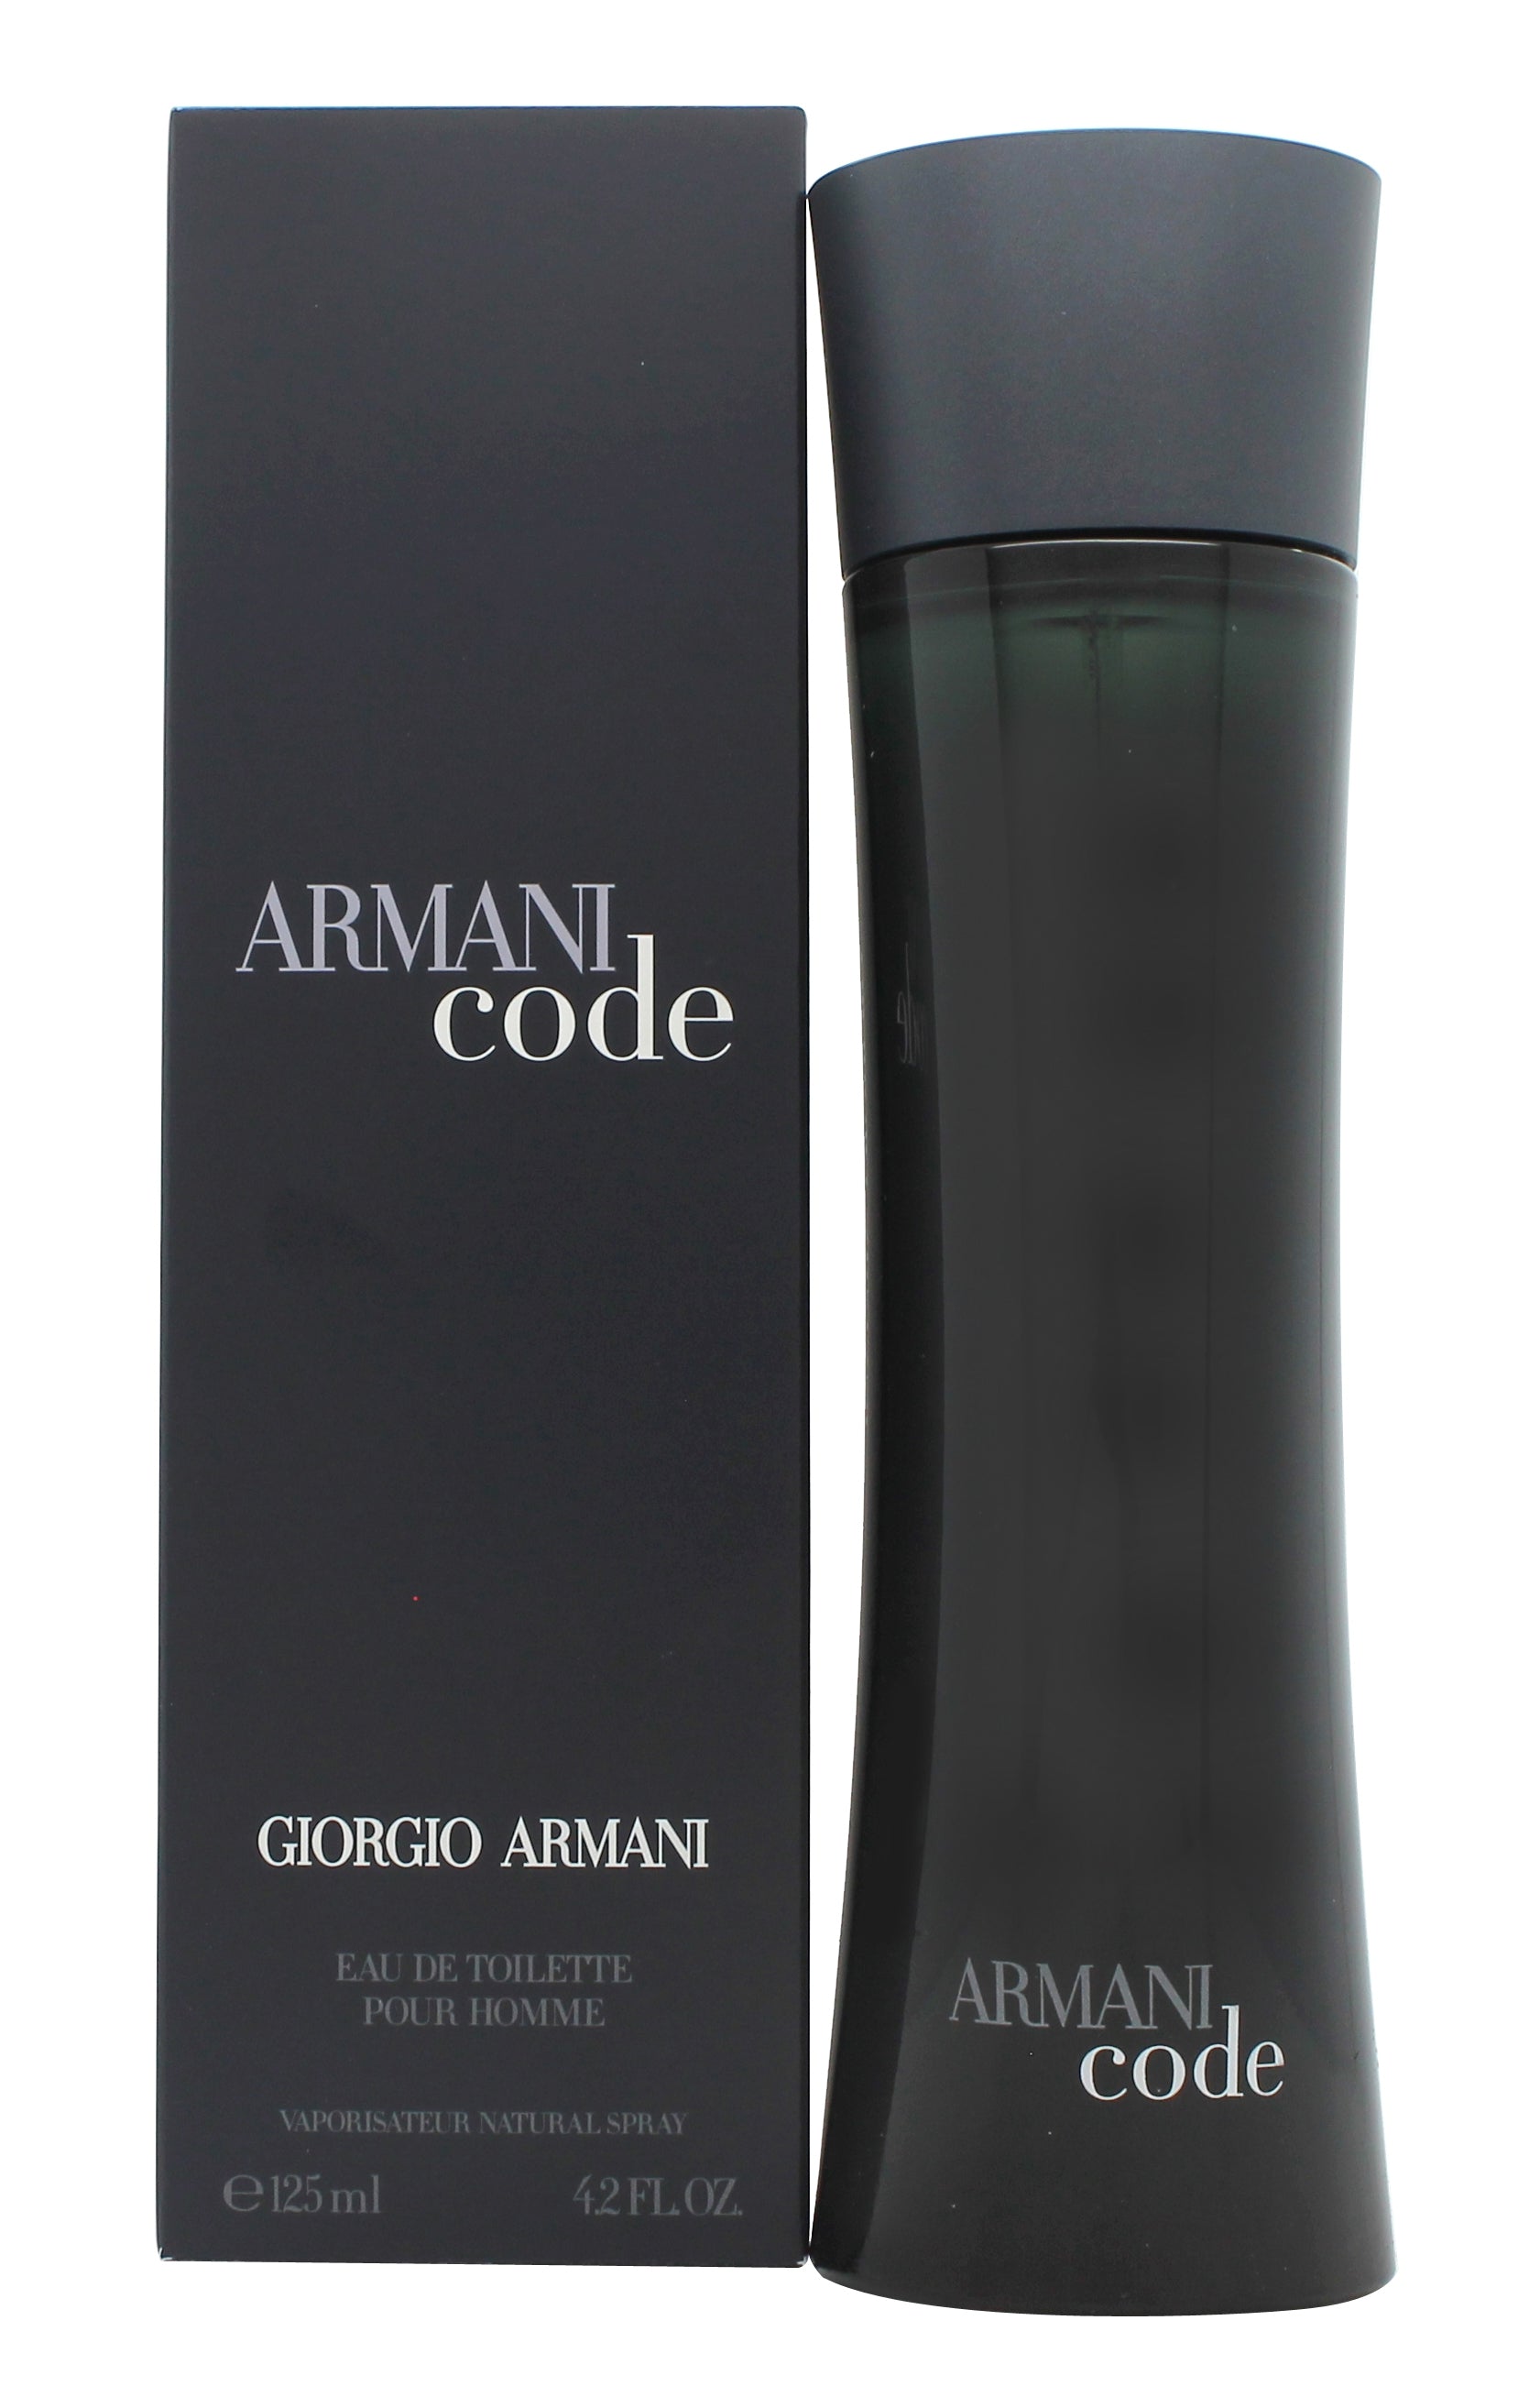 Armani code homme. Giorgio Armani Armani code 125. Armani code мужской 100 ml. Giorgio Armani Armani code Eau de Toilette. Giorgio Armani "Armani code Parfum" 125 ml.